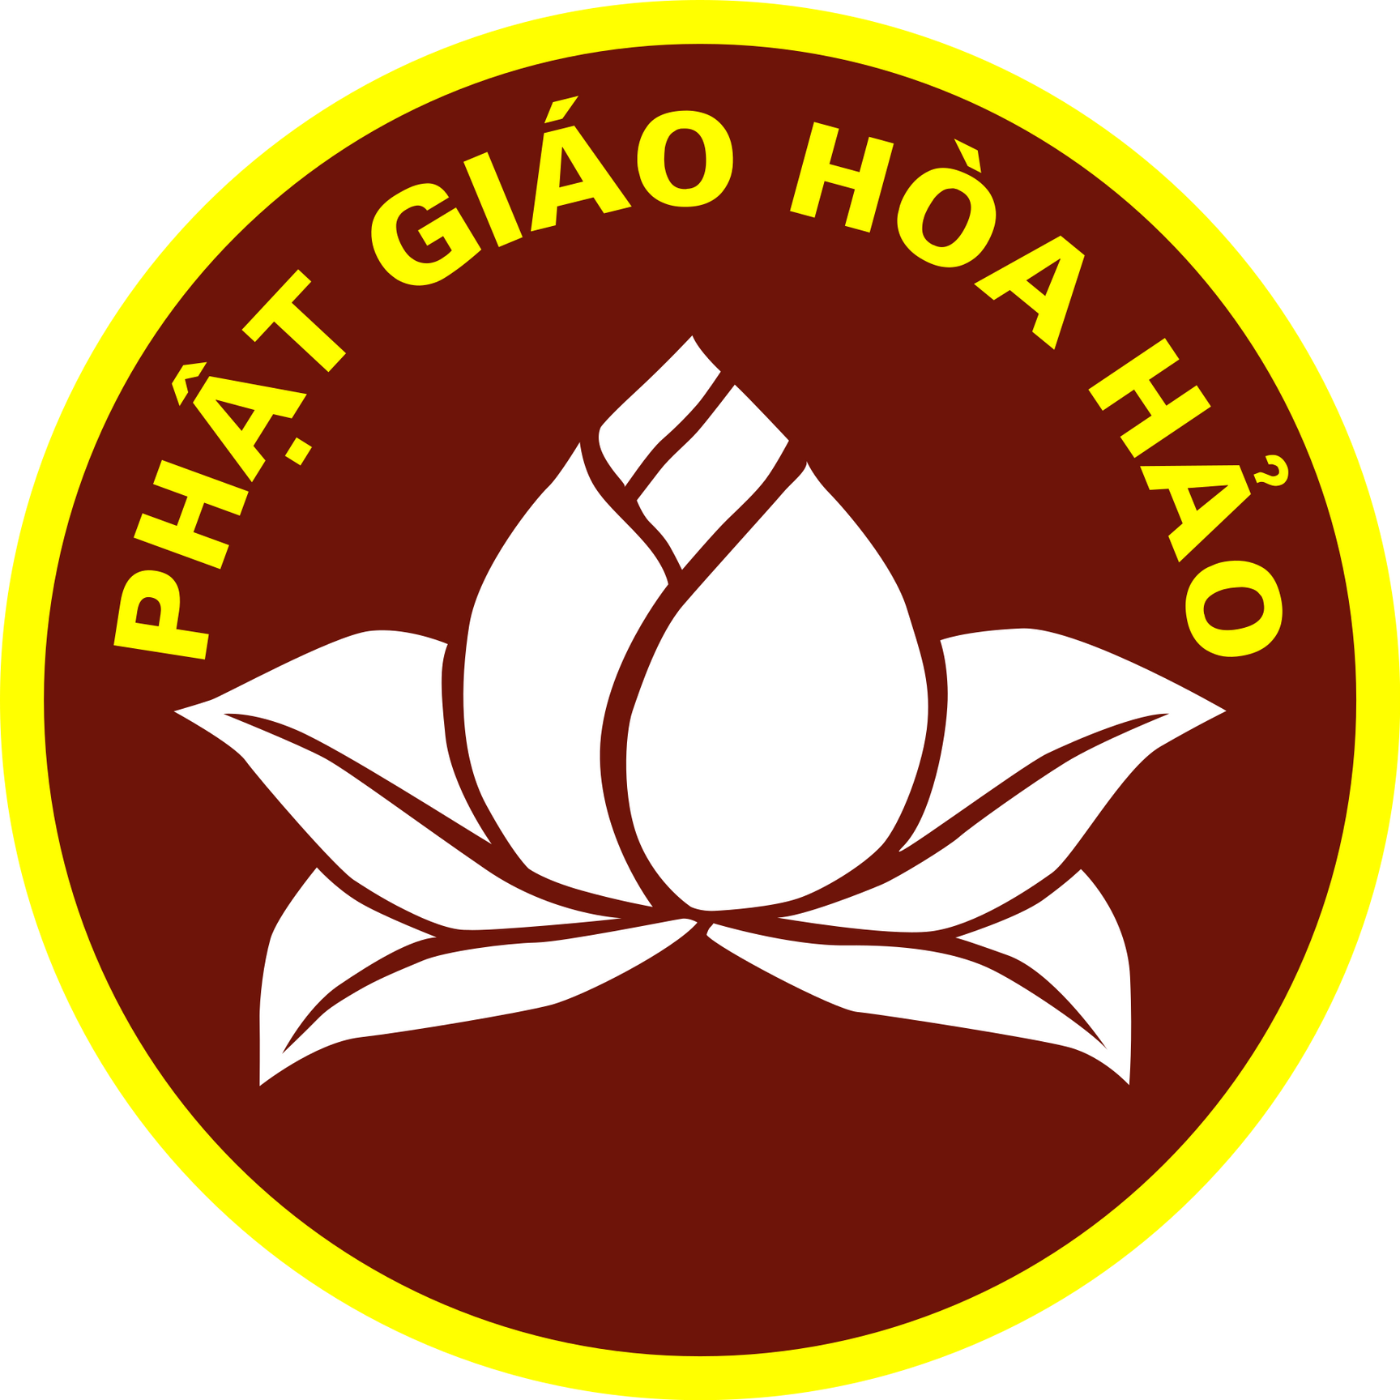 Artwork for podcast DAO PHAT KHOA HOC VAT LY THIEN TONG VIET NAM